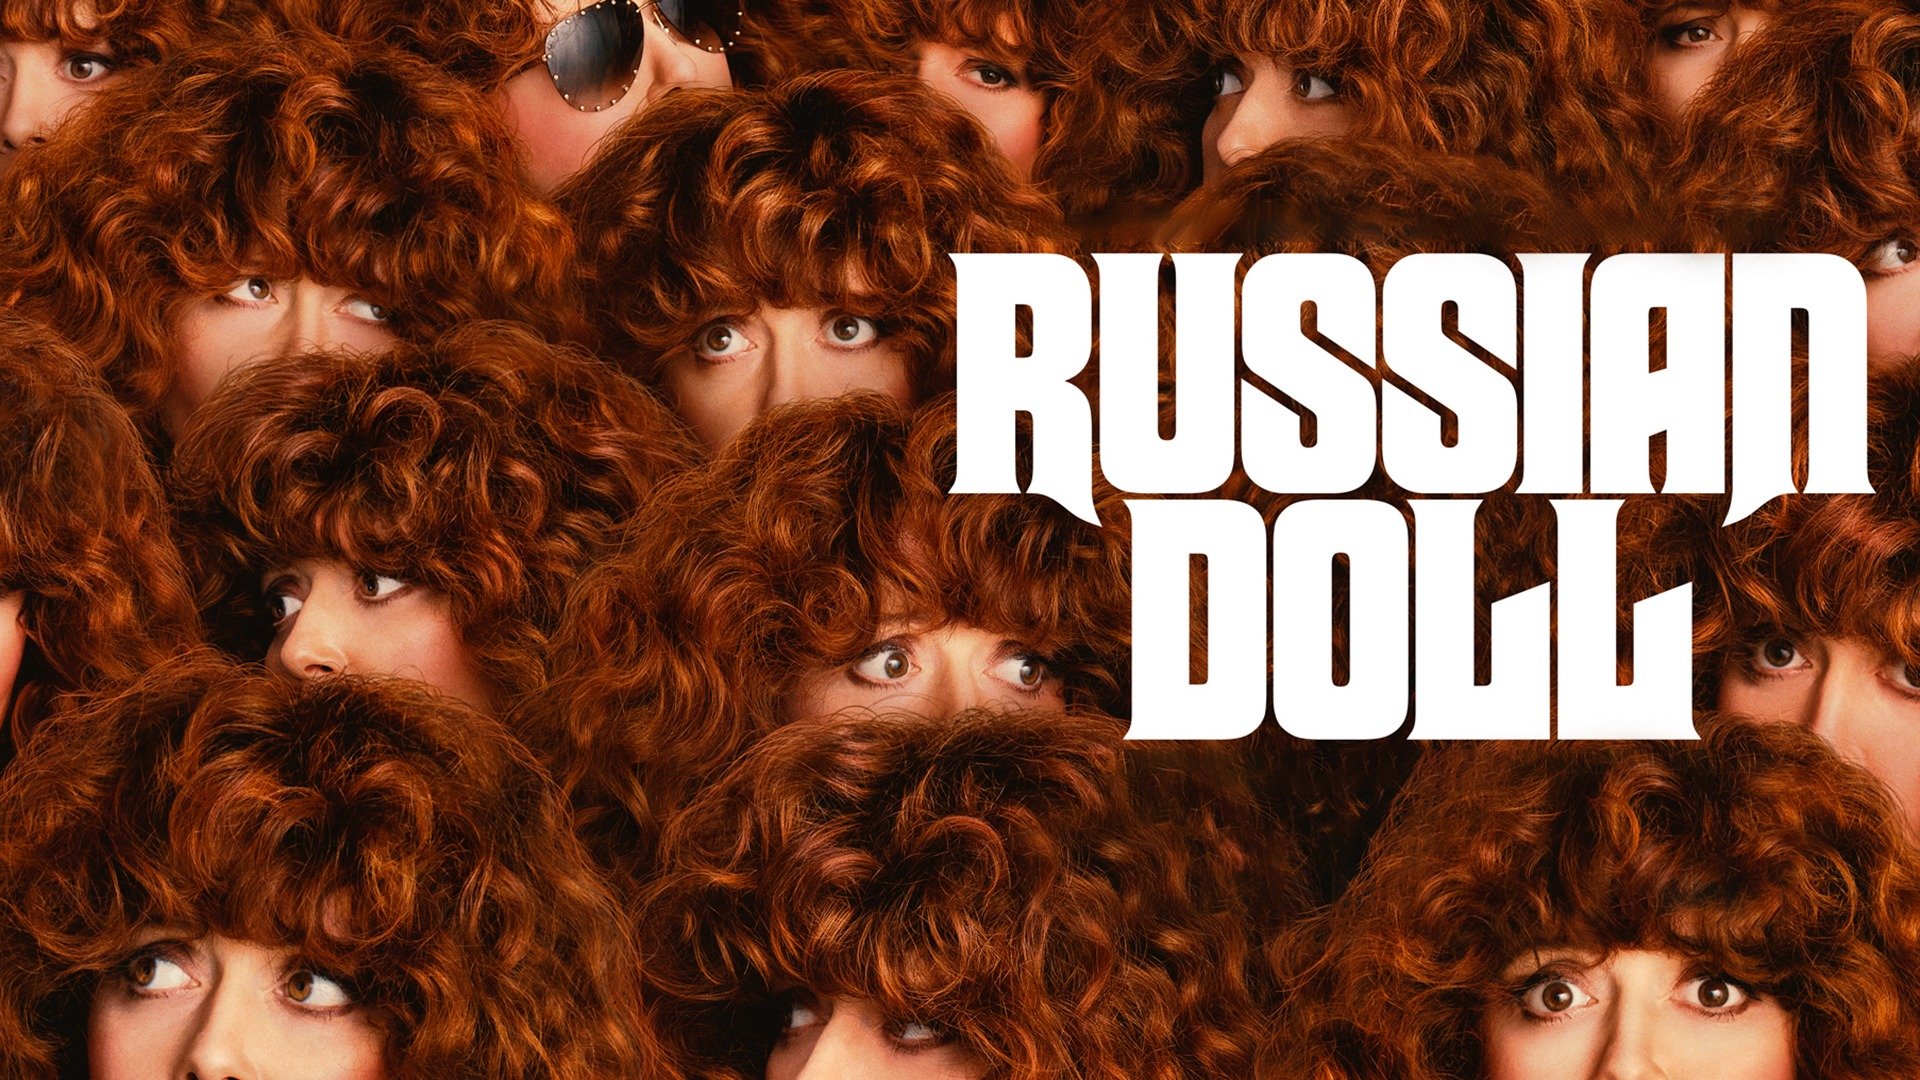 russian doll season 3